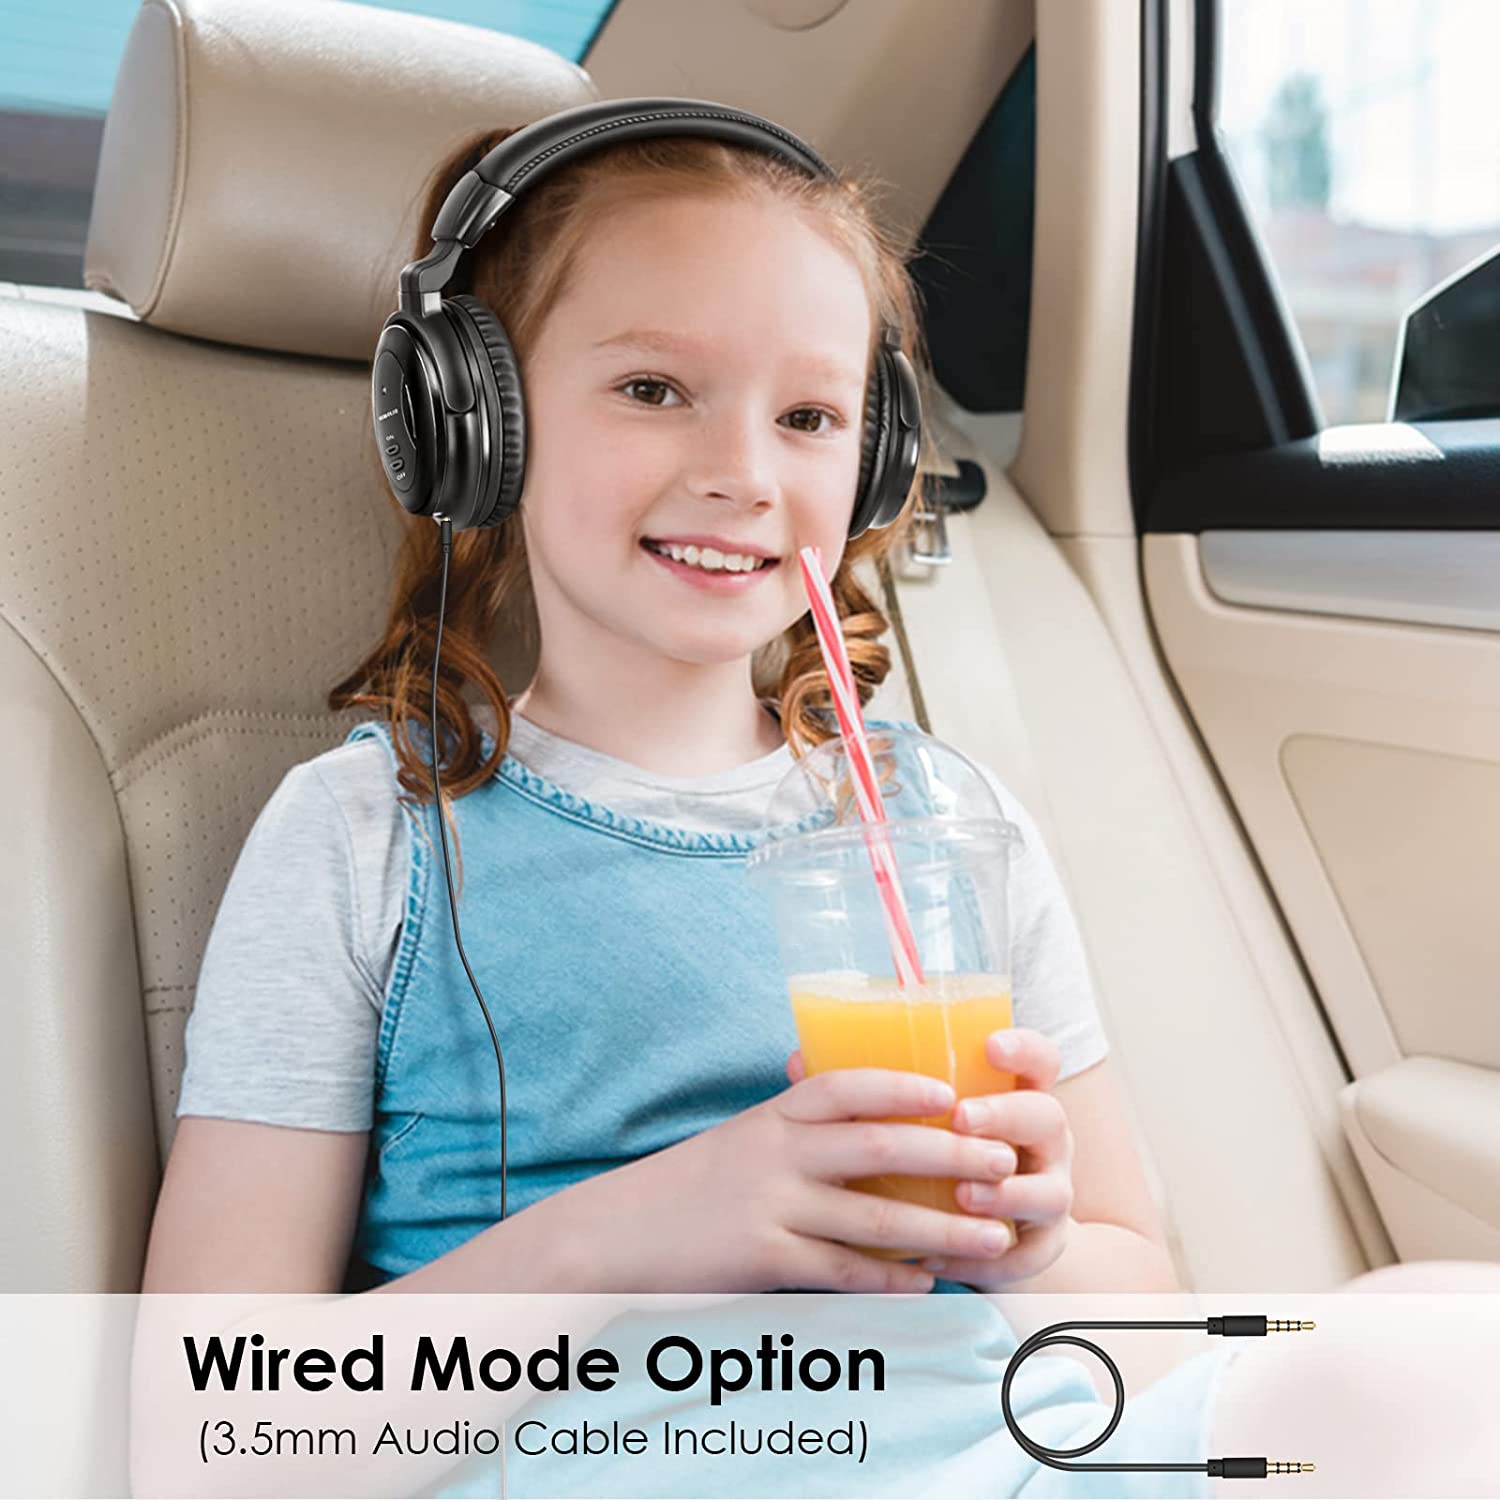 SIMOLIO wireless IR car headphones for kids and adults shareport SM-568